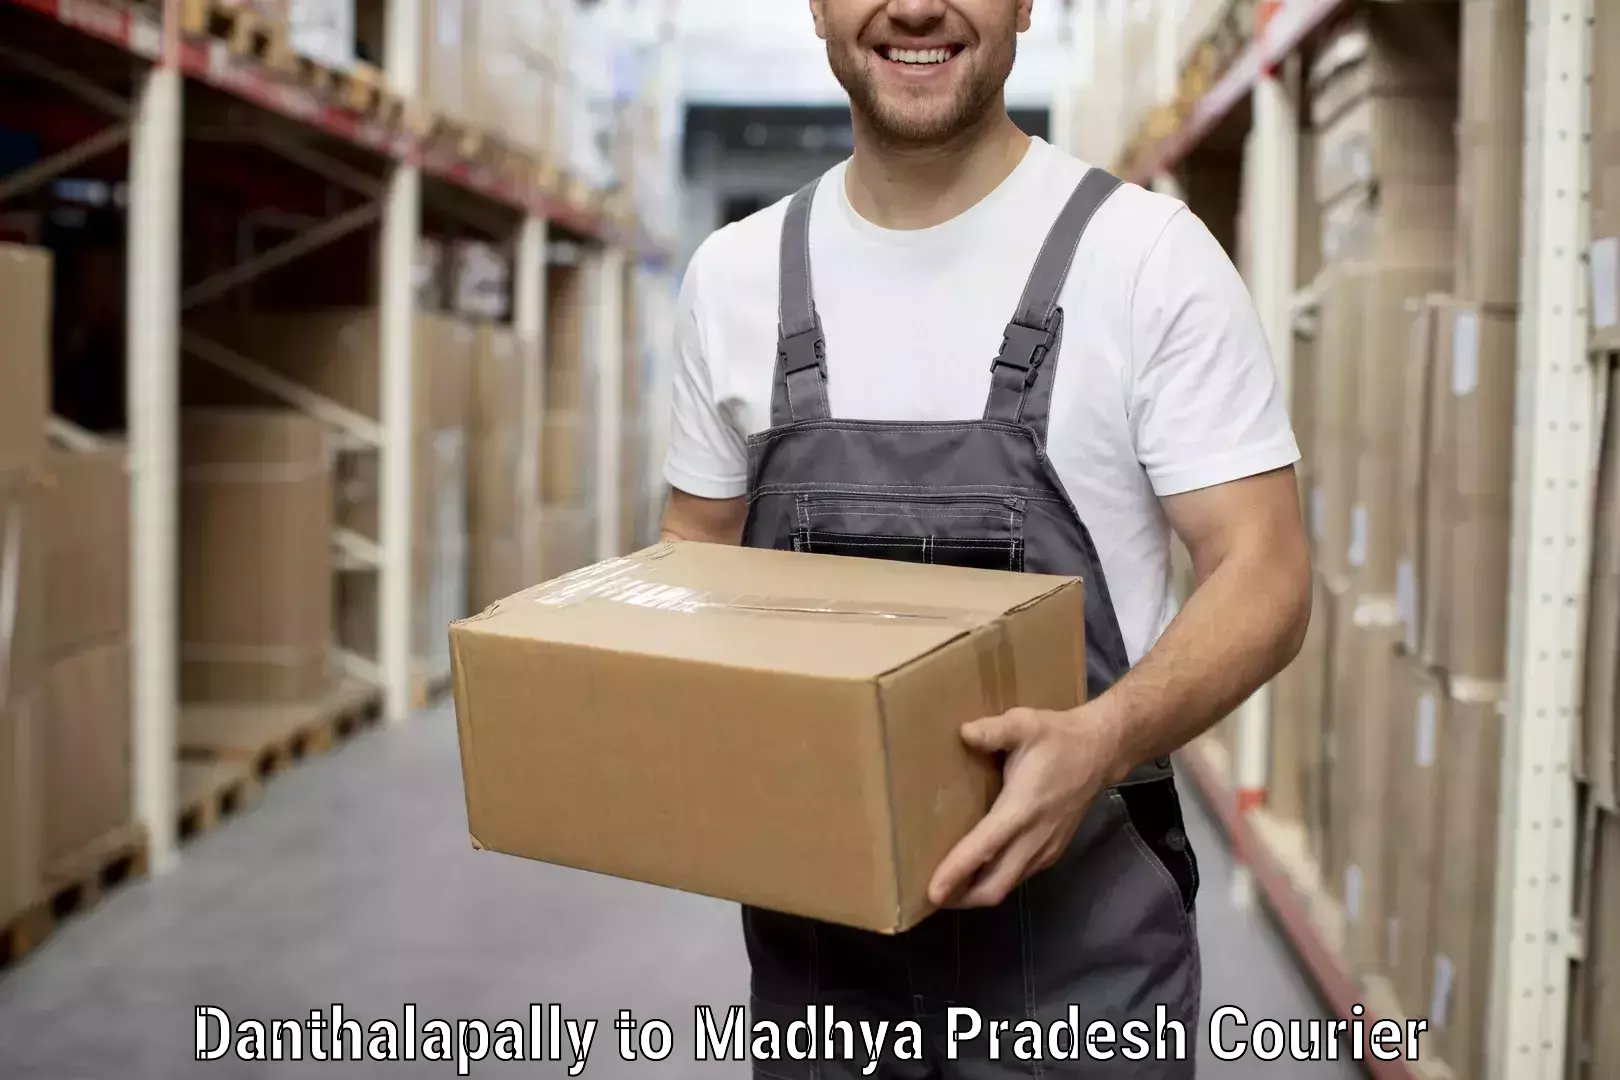 Furniture delivery service Danthalapally to Gadarwara